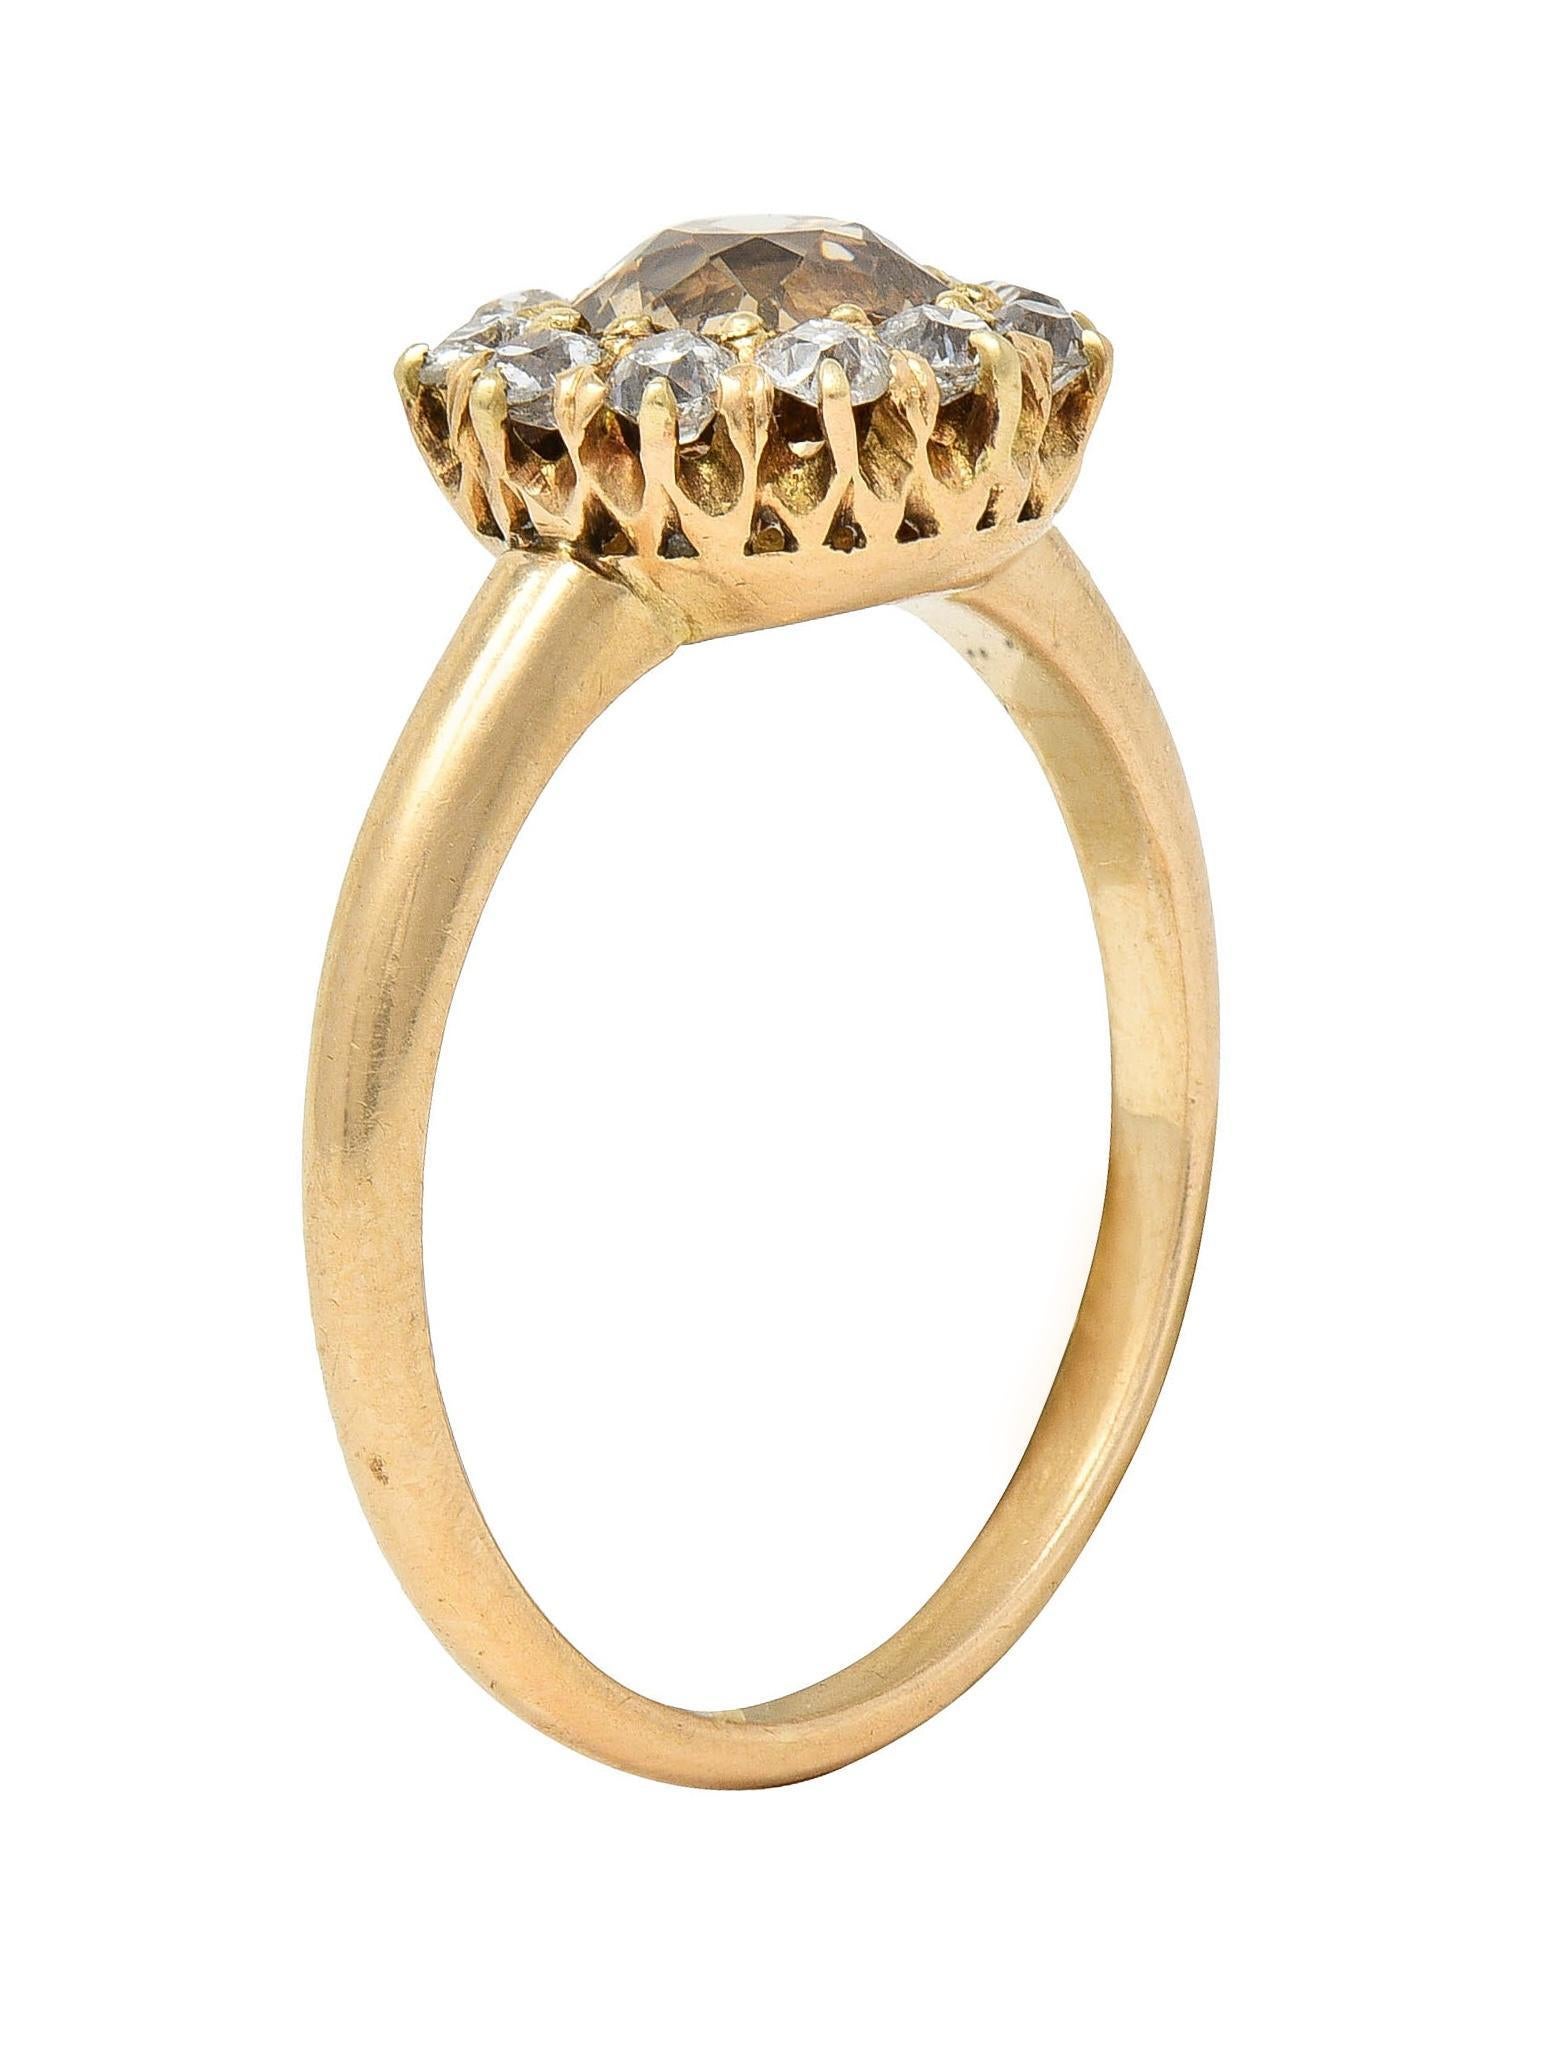 Victorian Old Mine Fancy Brown Diamond 14 Karat Gold Antique Halo Ring For Sale 5